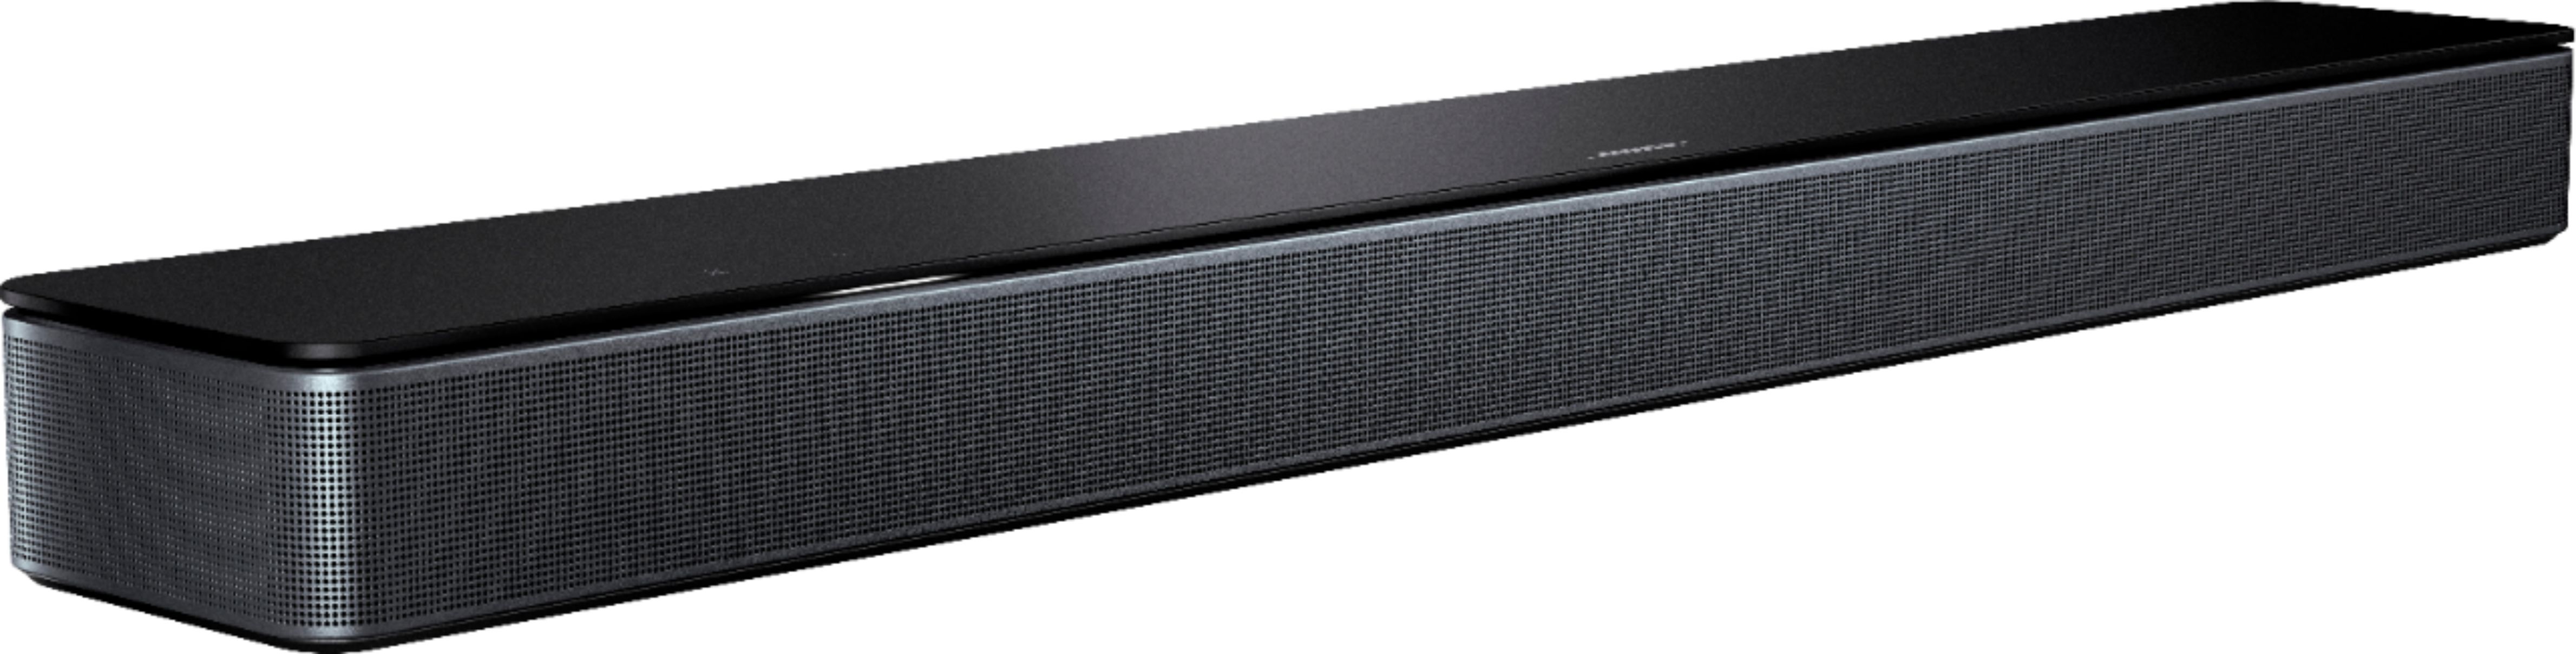 Smart Soundbar 300 with Voice Black 843299-1100 - Best Buy